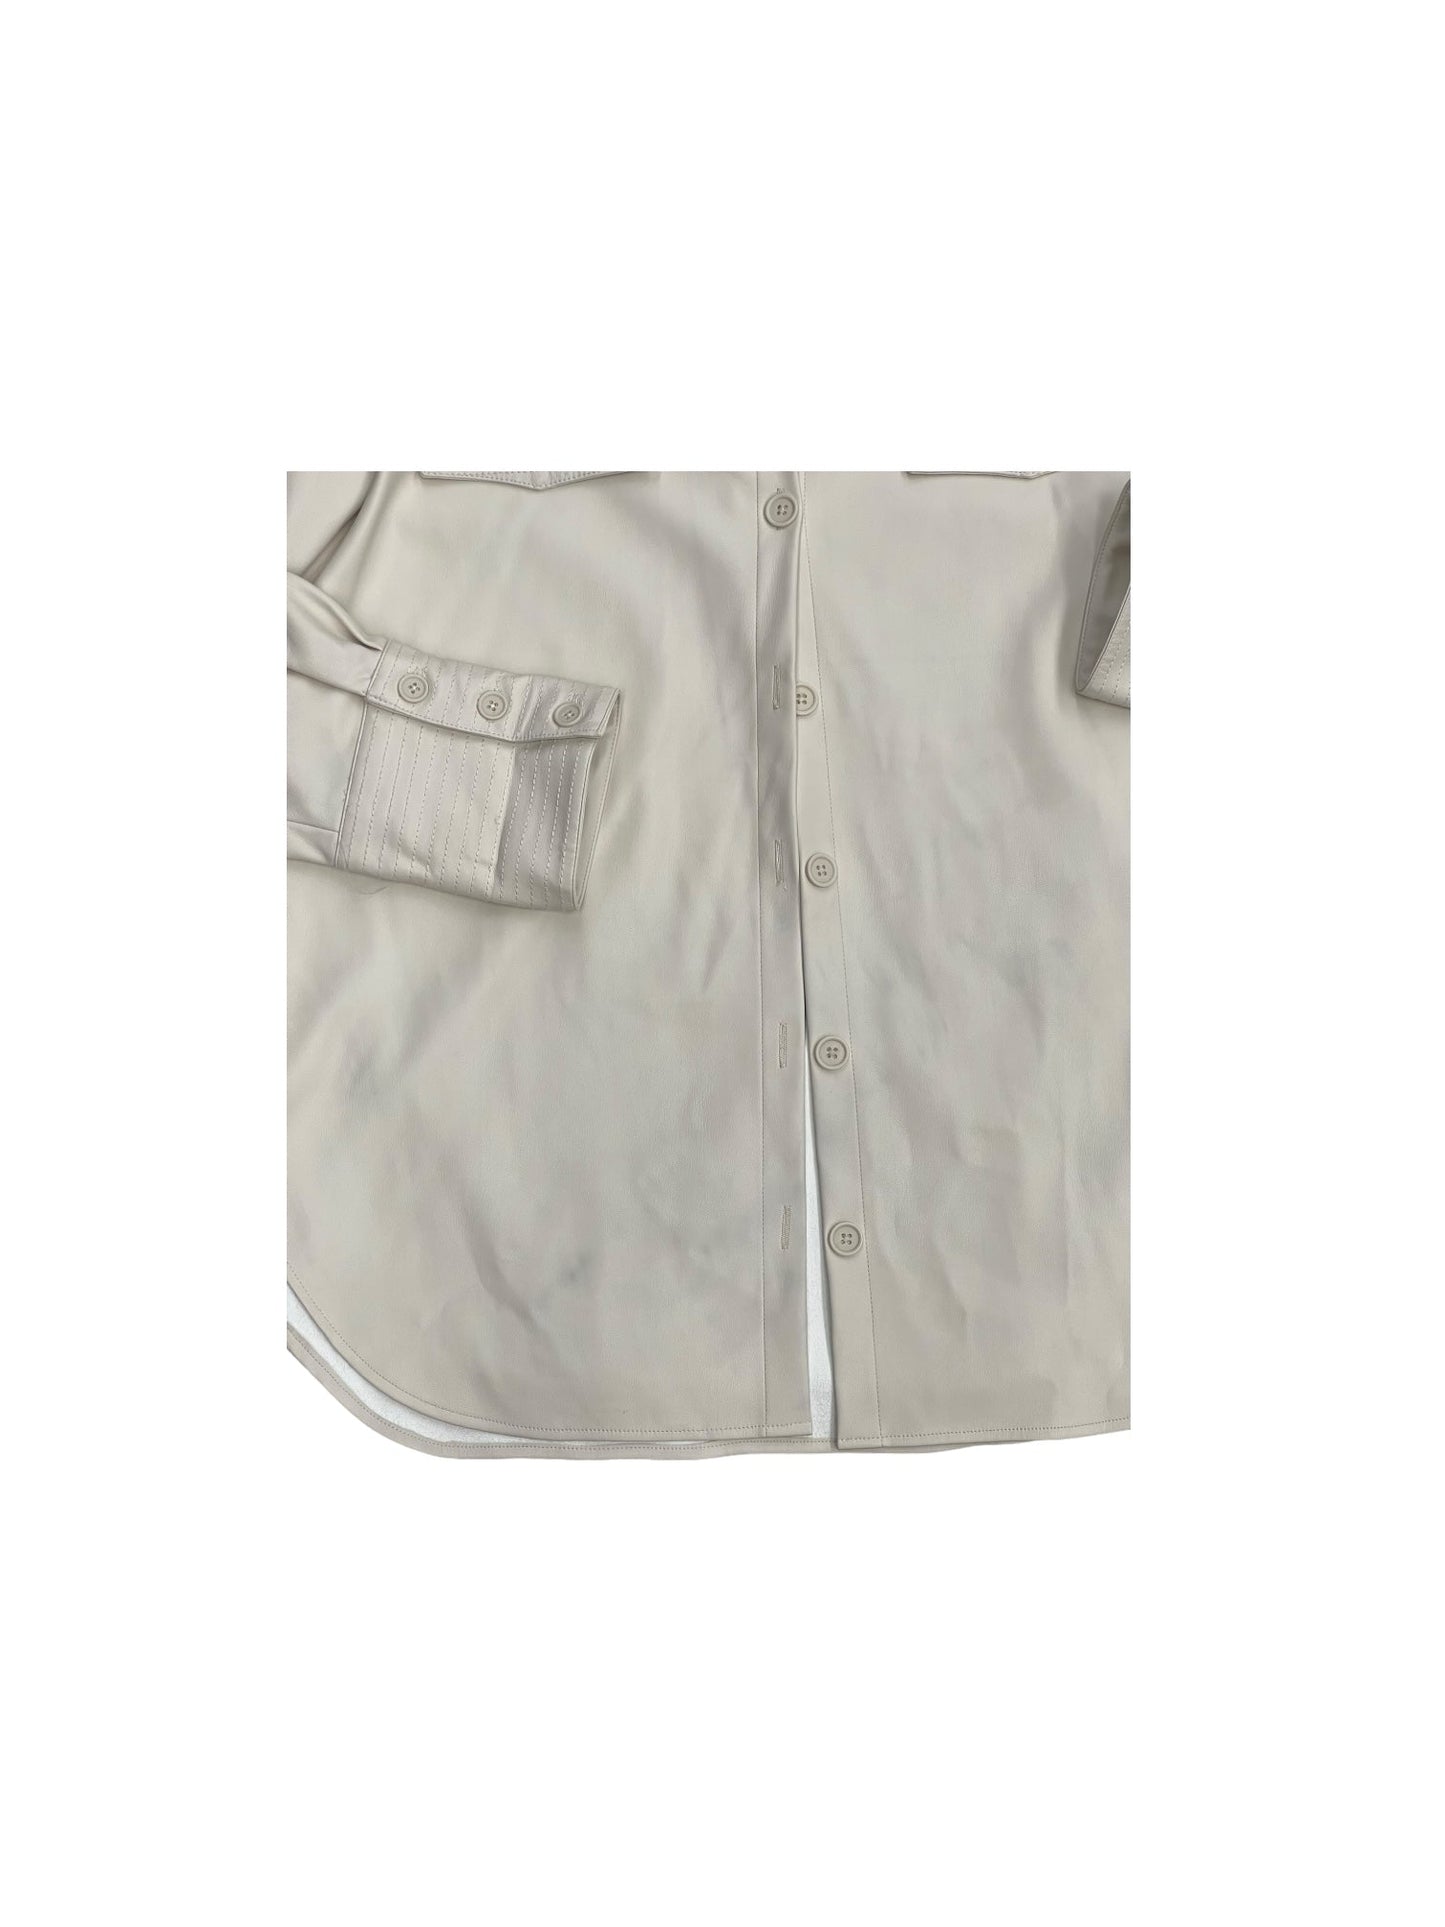 Cream Jacket Shirt Bb Dakota, Size M